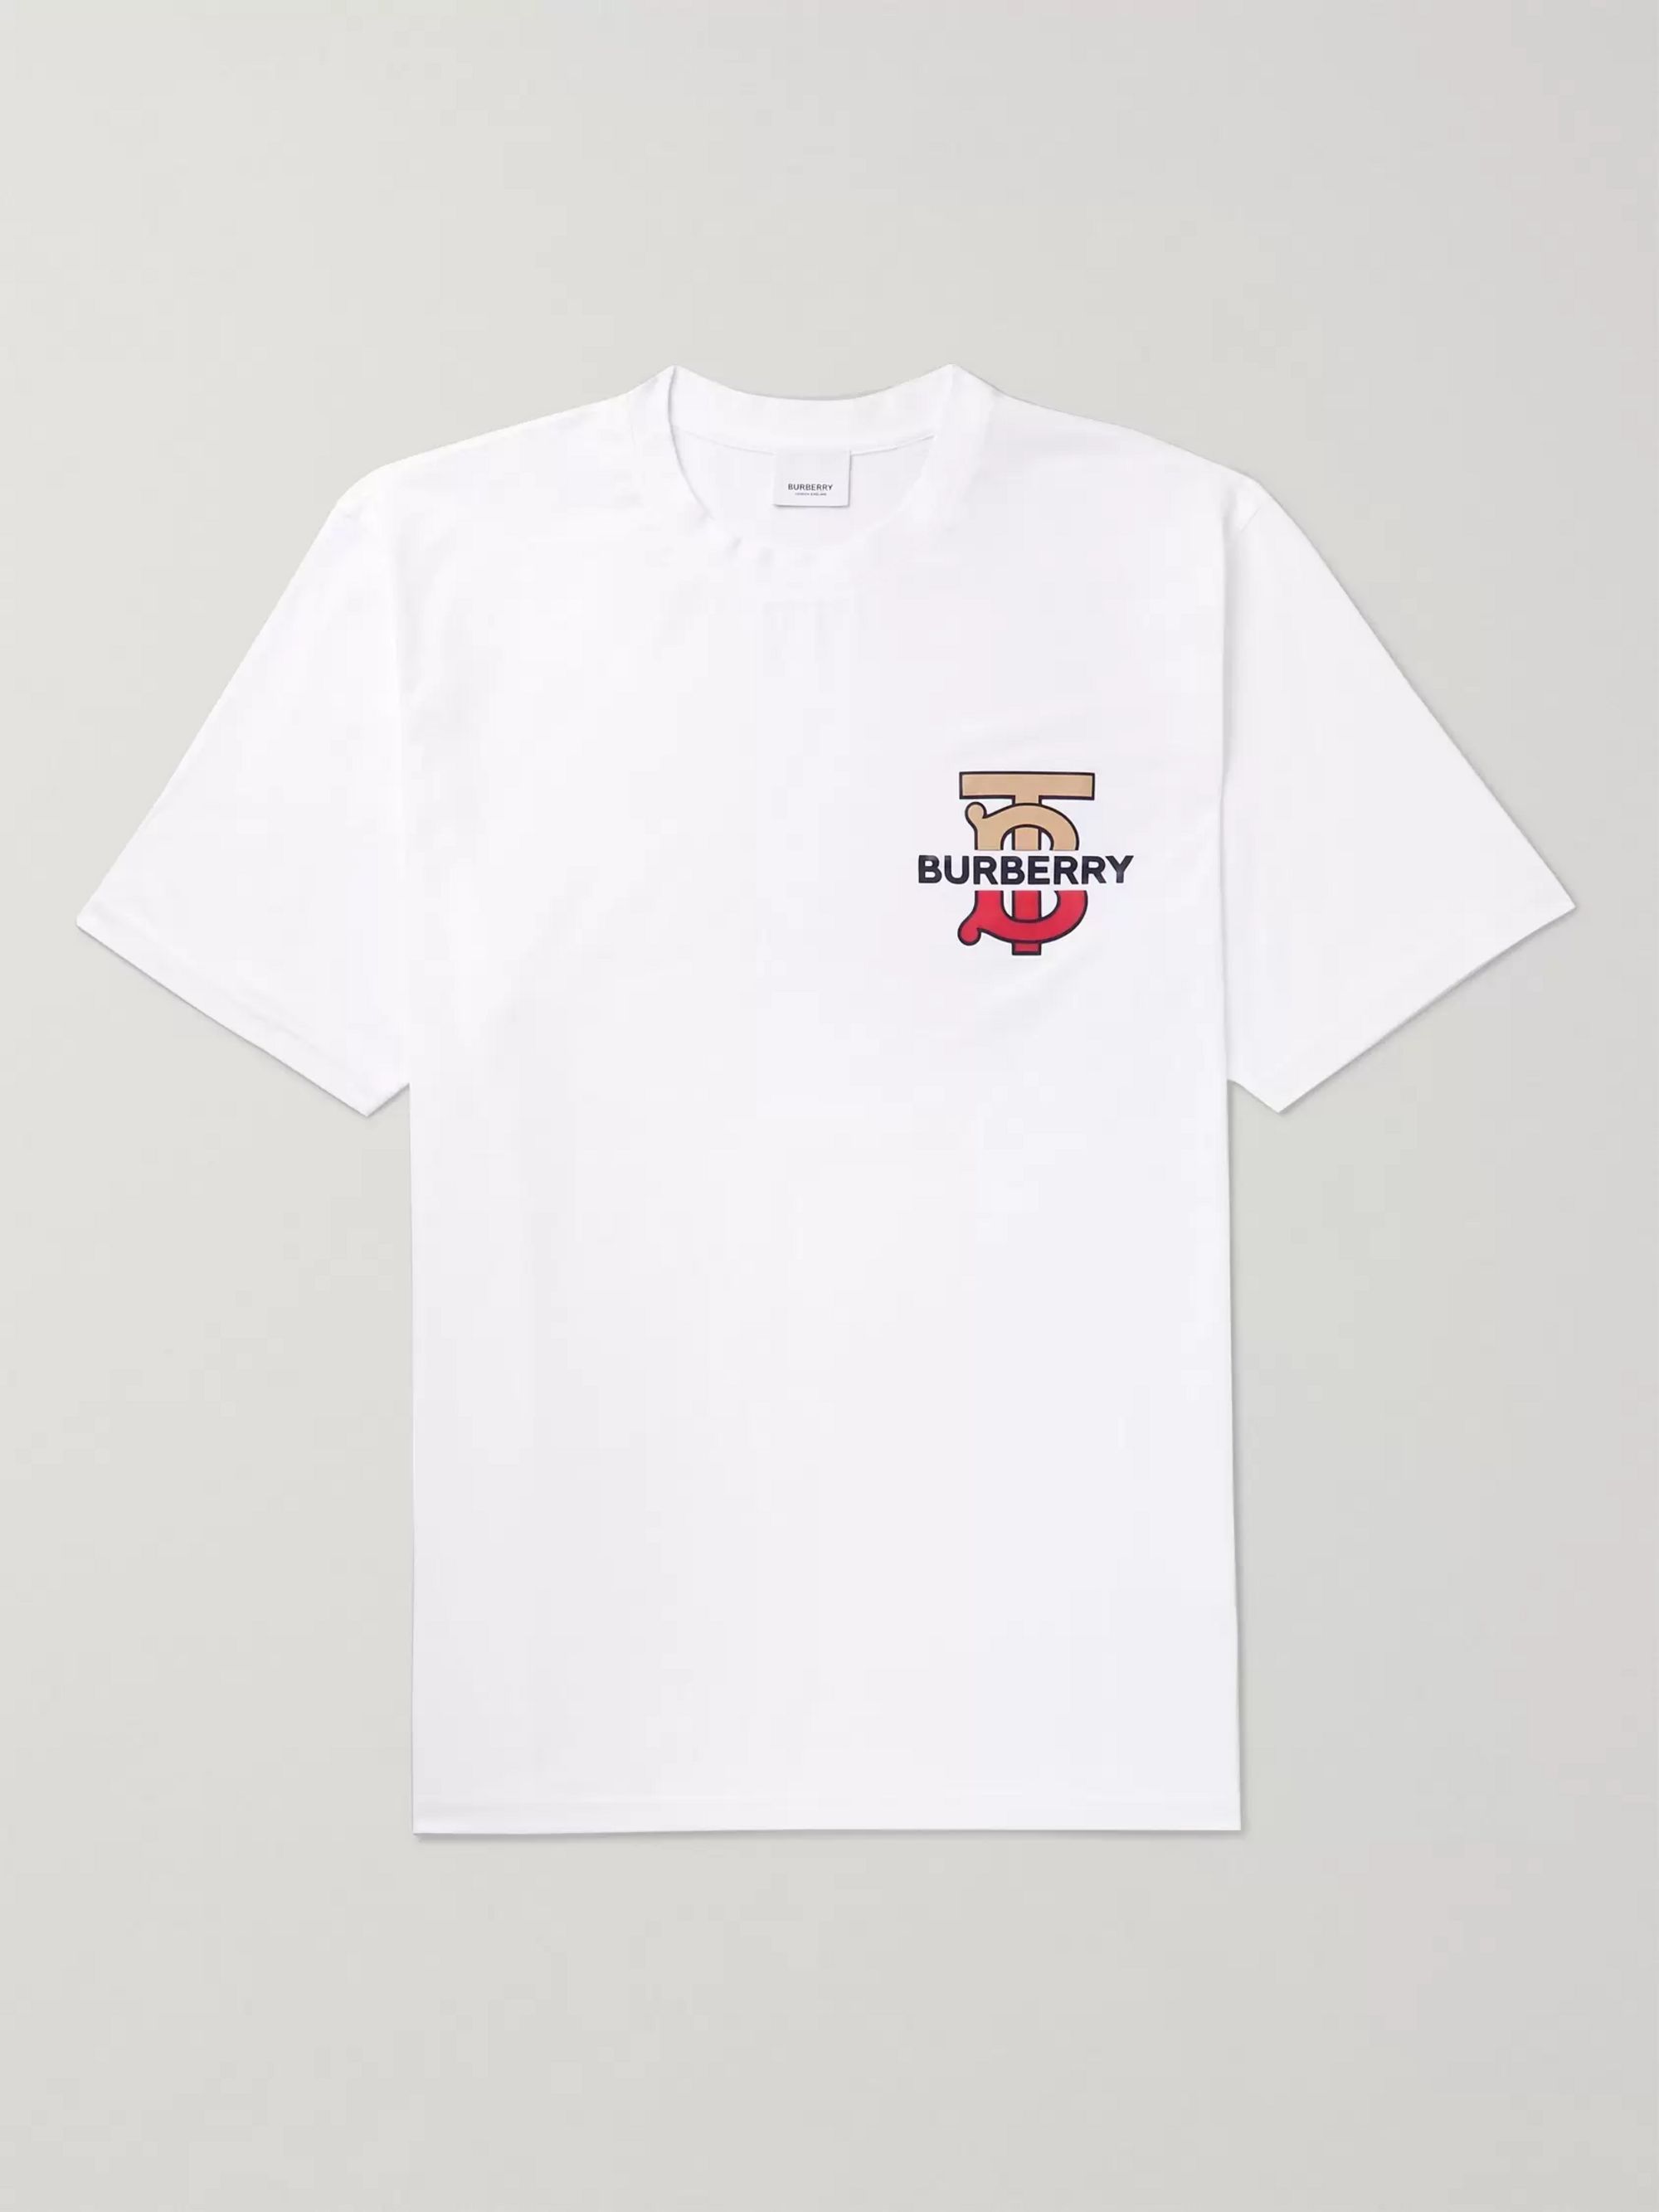 Burberry Shirt Logo Hotsell, 57% OFF | www.hcb.cat